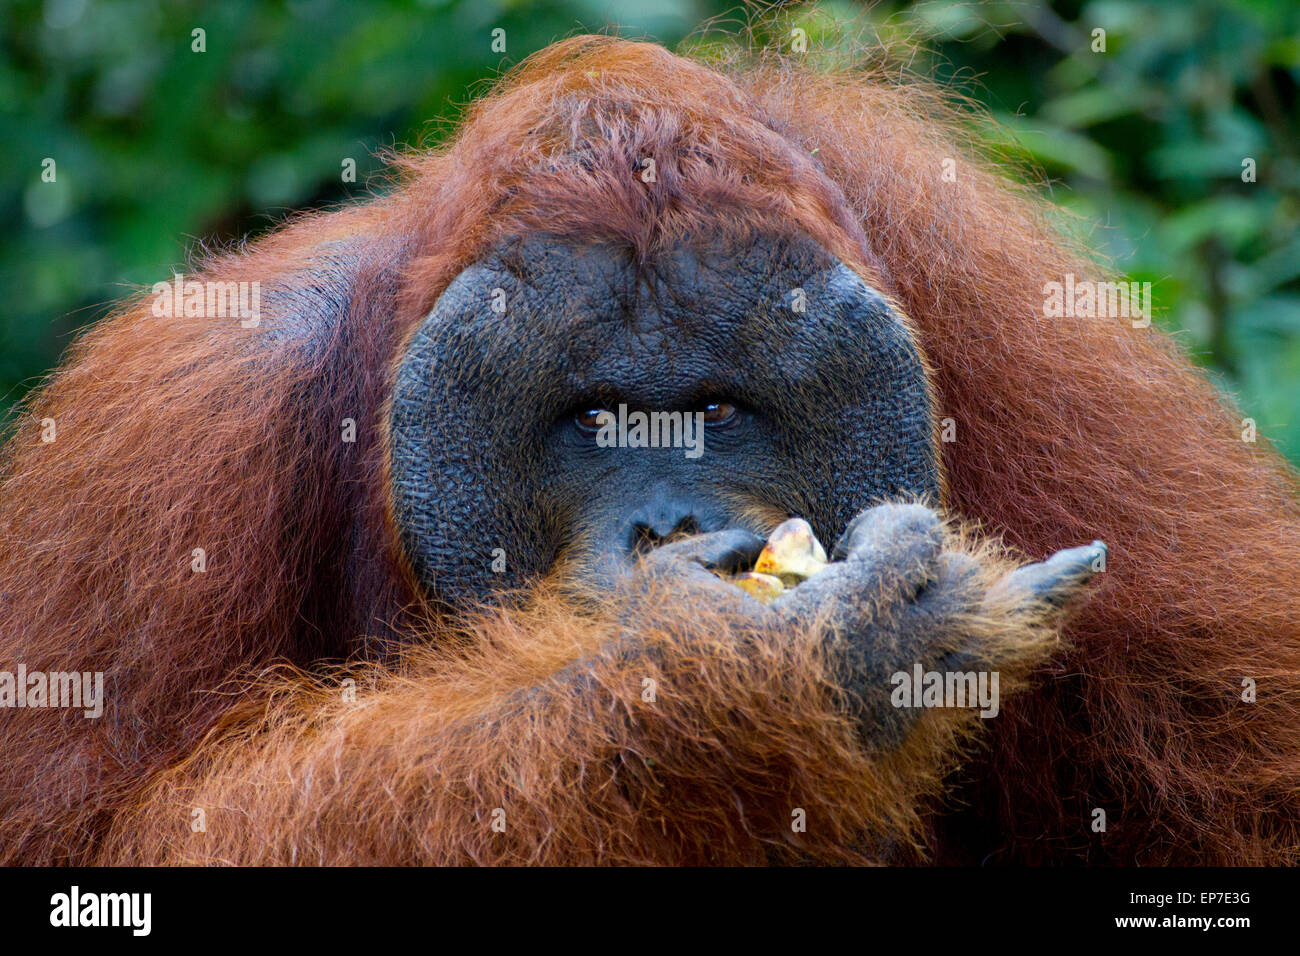 Large Orangutan with cheek pads Eating Stock Photo